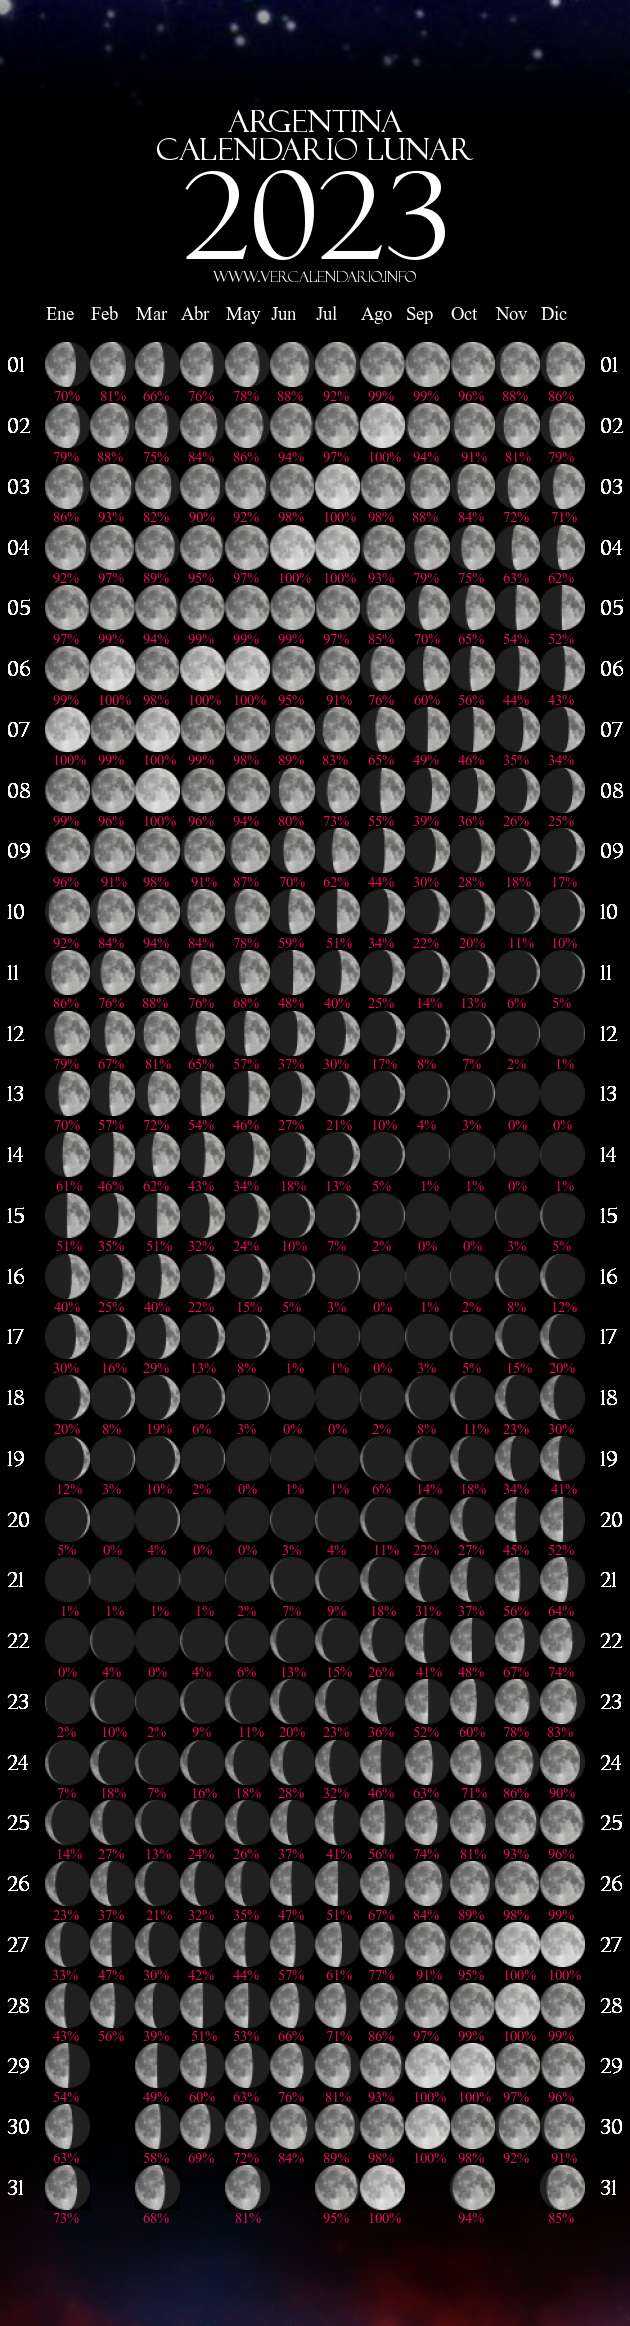 Calendario Lunar 2023 (Argentina)